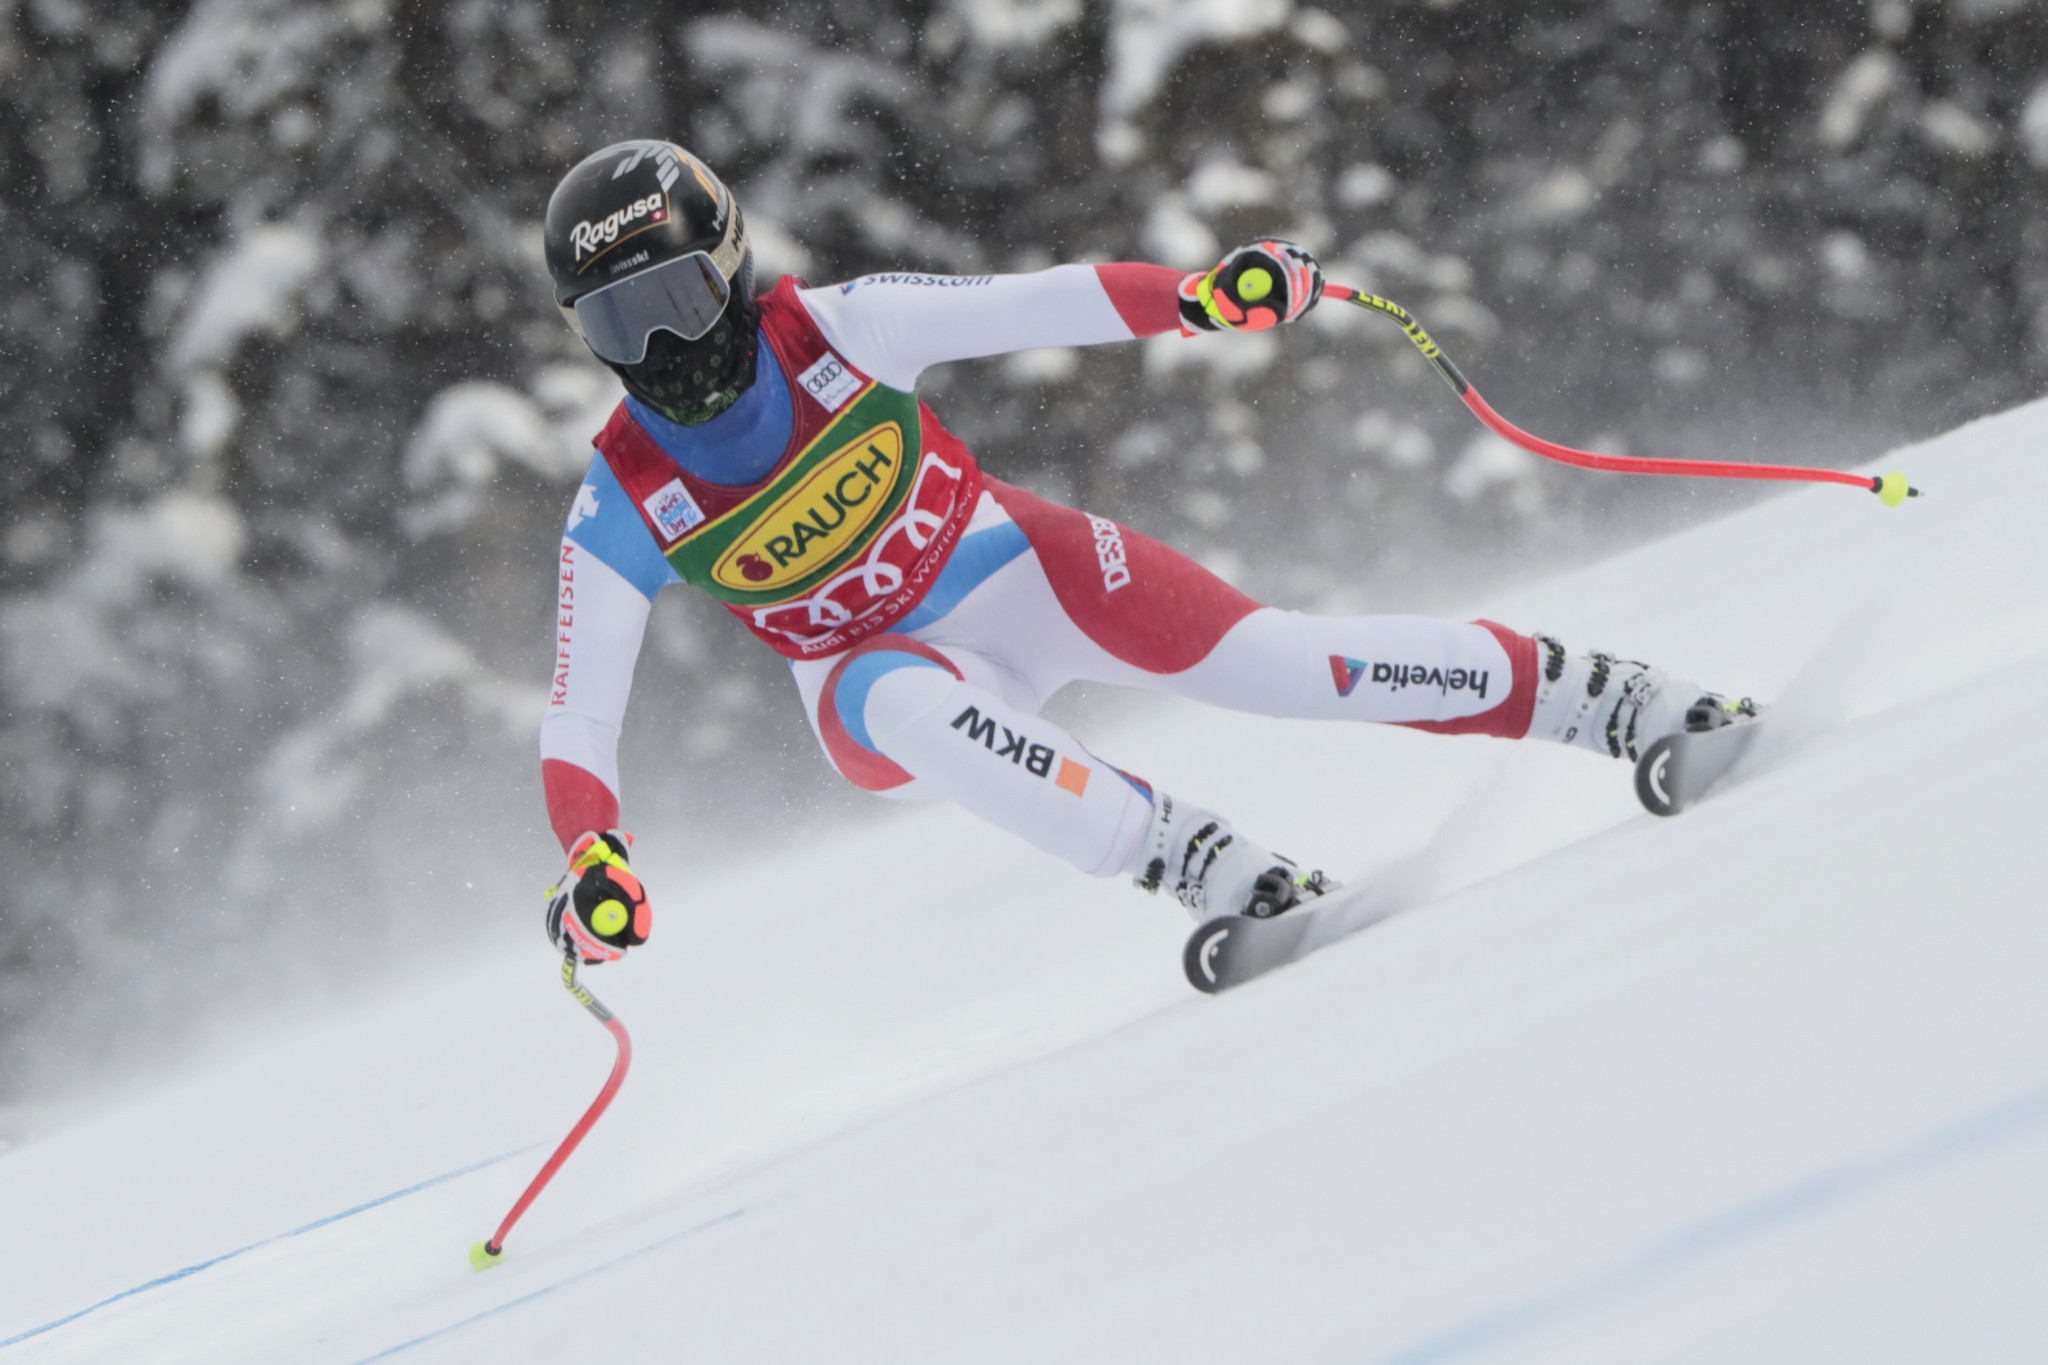 Switzerland's world champion Lara Gut-Behrami finished second in 1:18.39 ©Getty Images